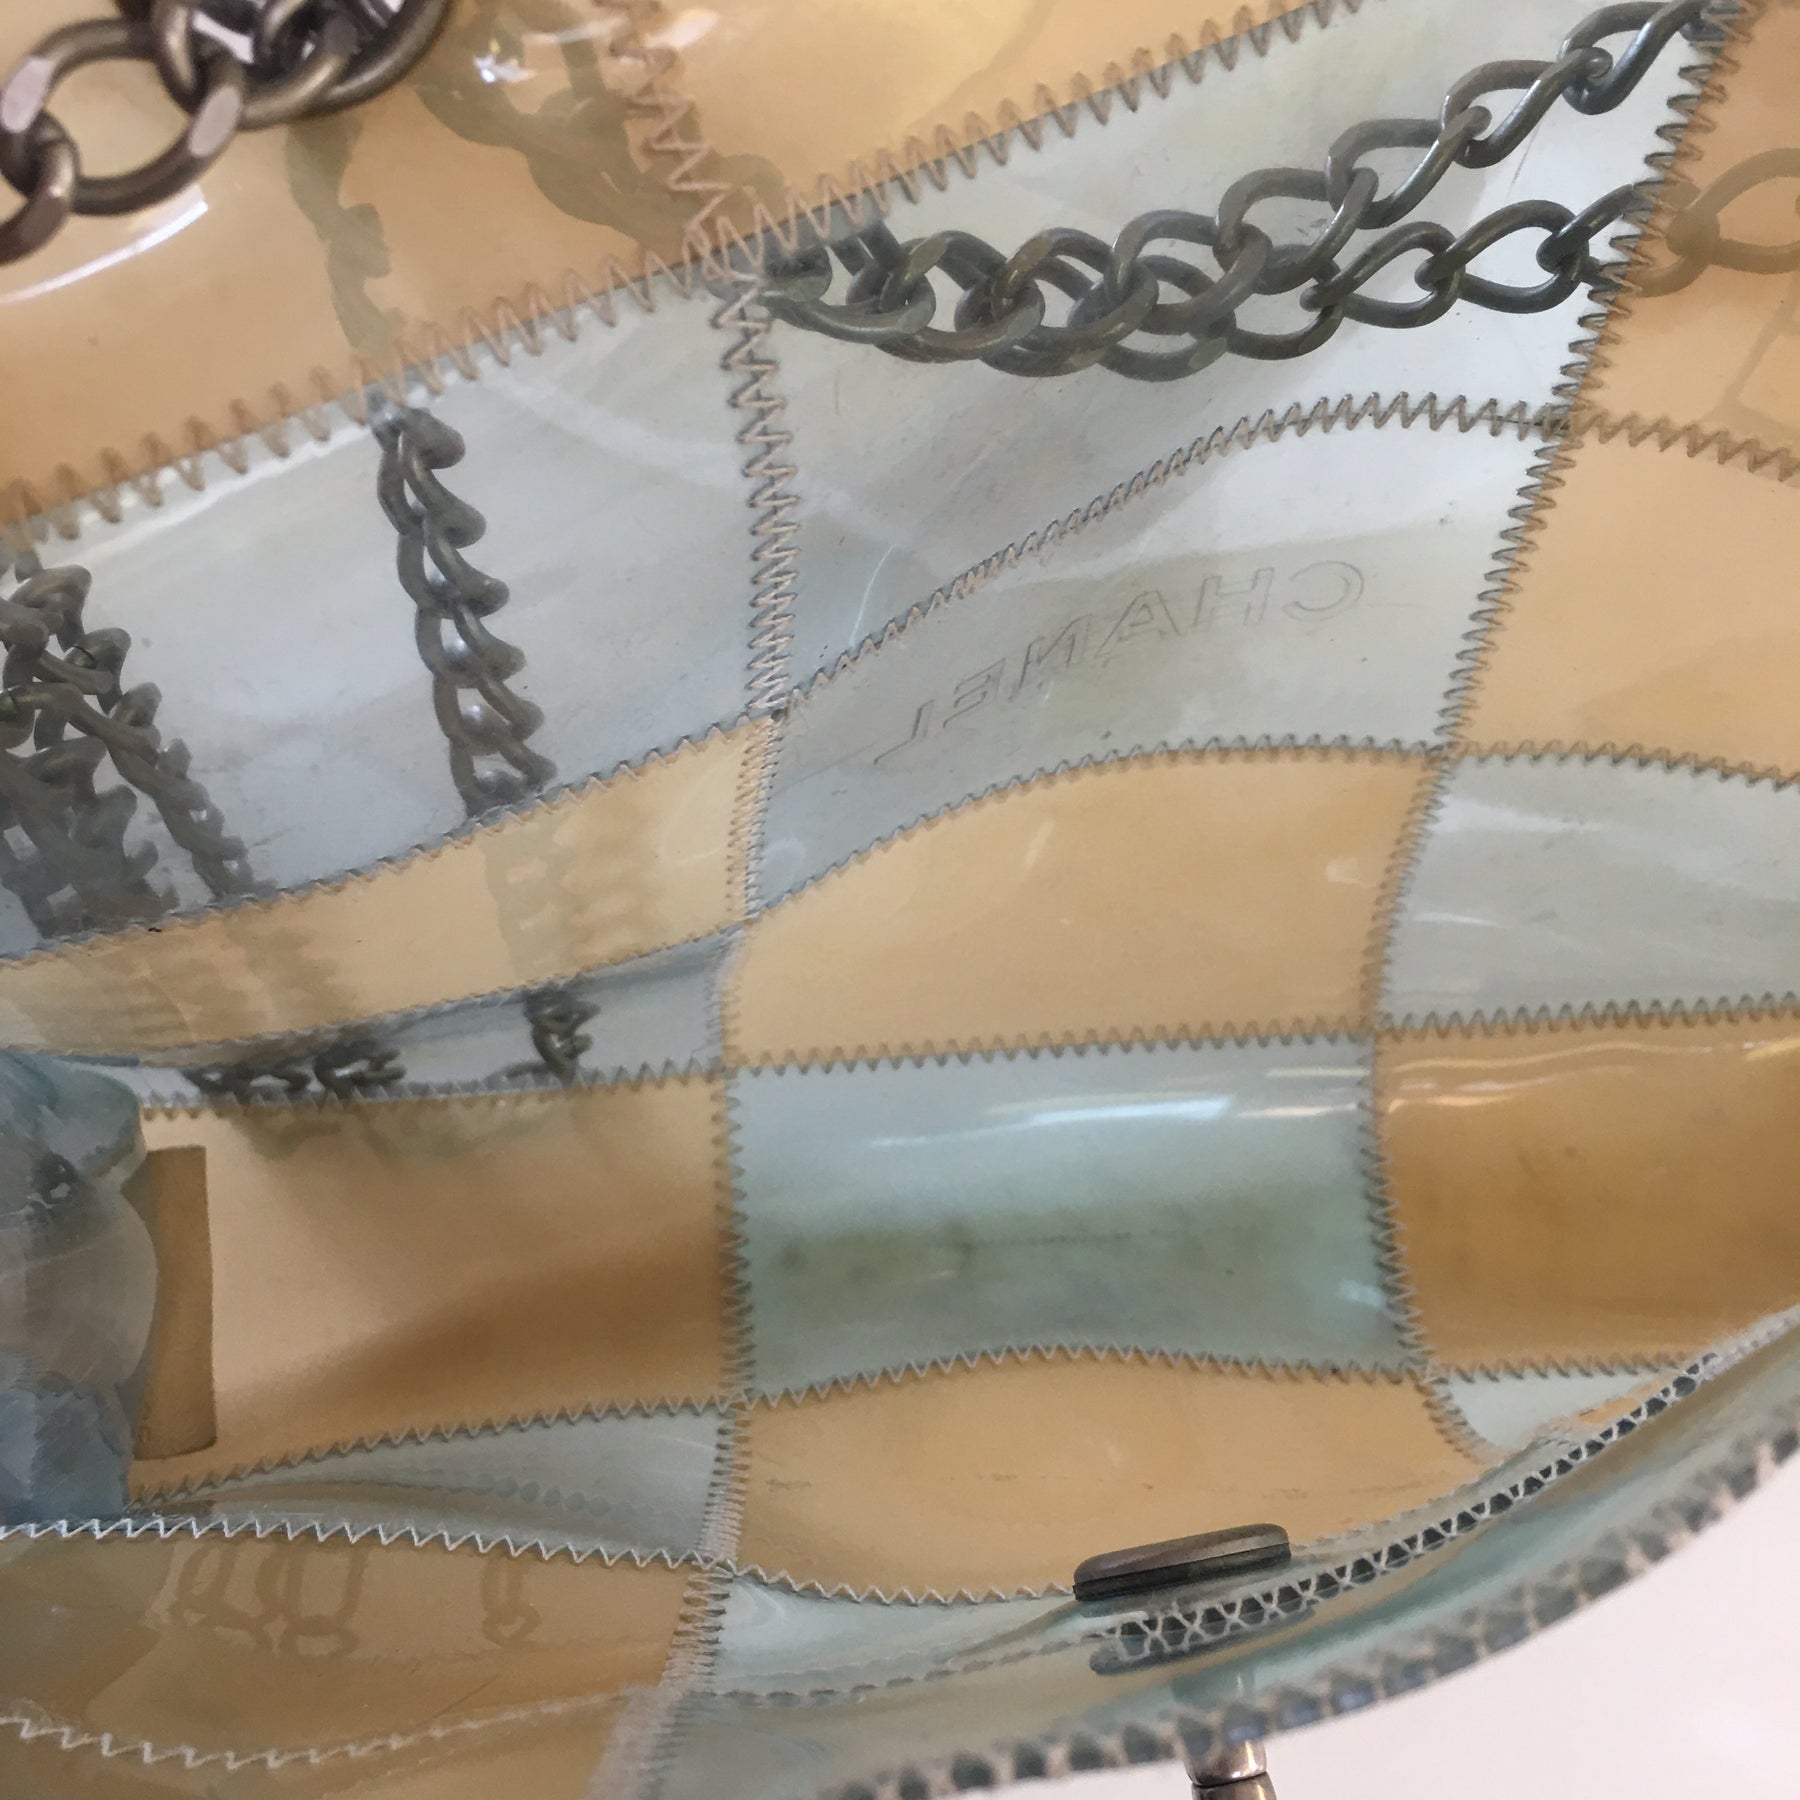 Chanel Shoulder Bag in Multicolor Plastic – Fancy Lux